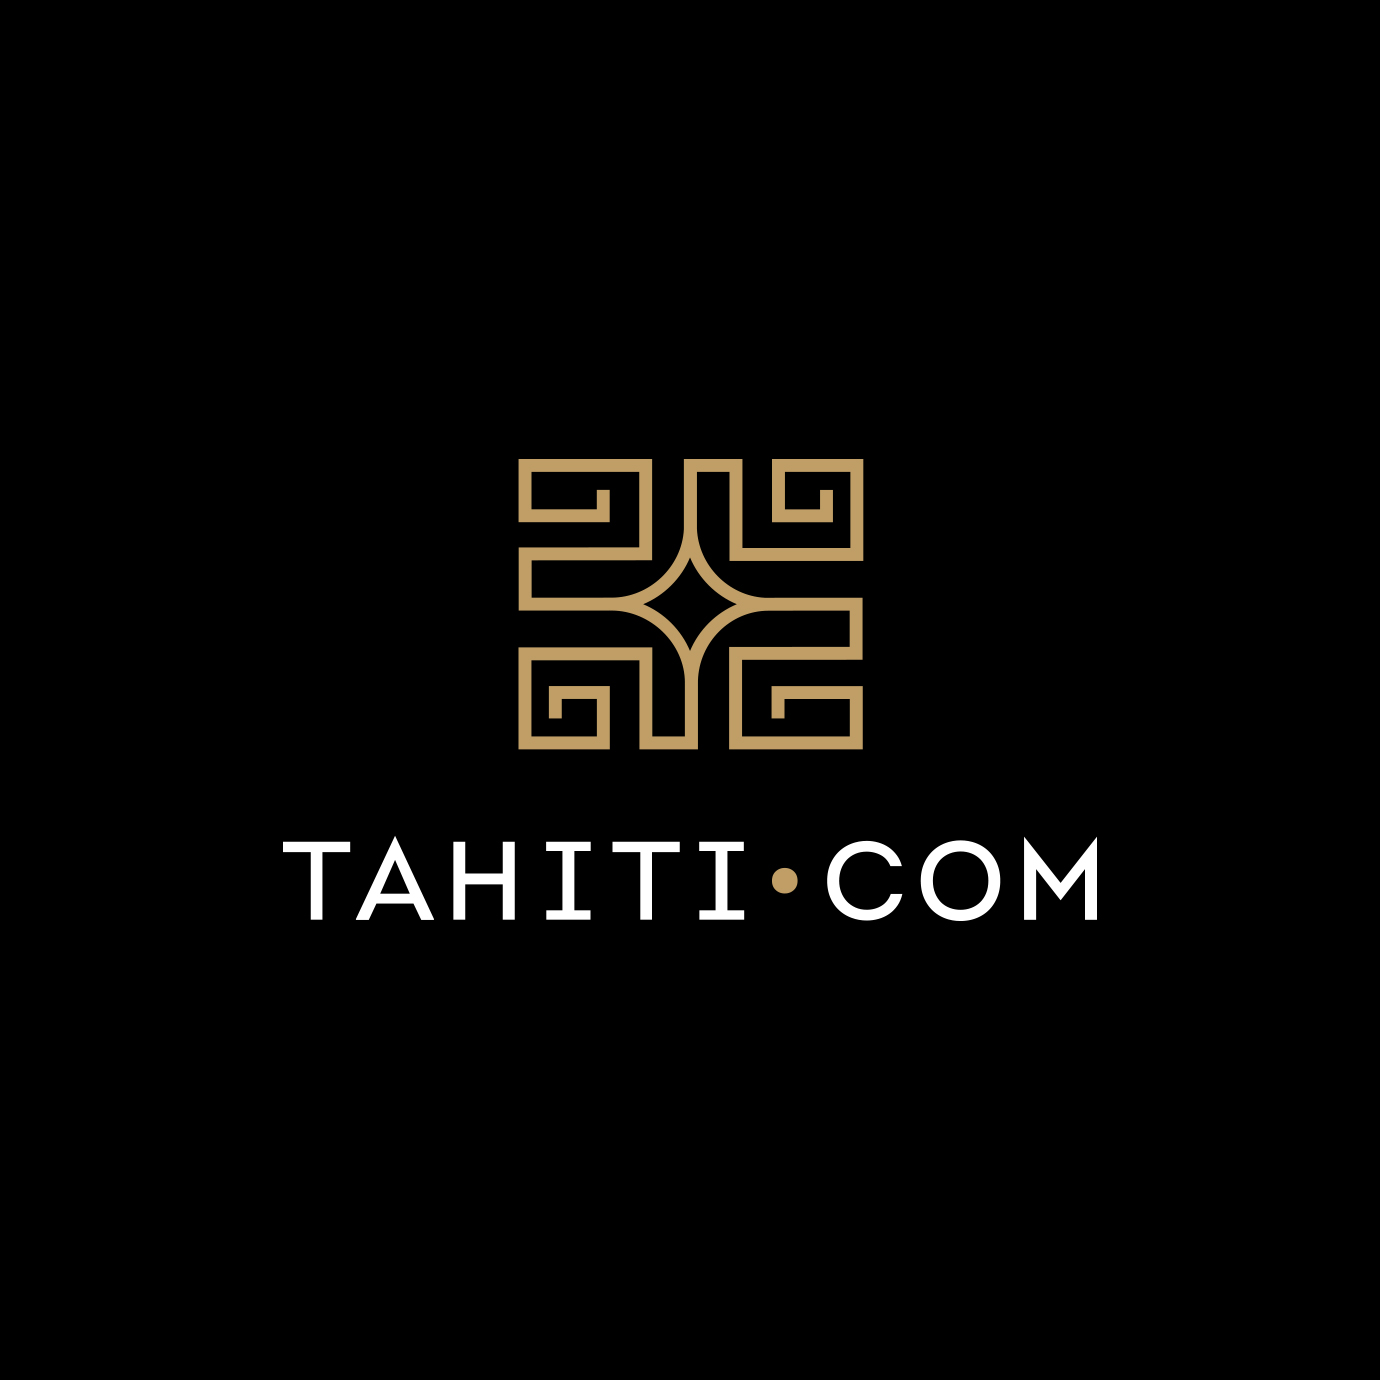 gold and white tahiti.com stacked logo on black